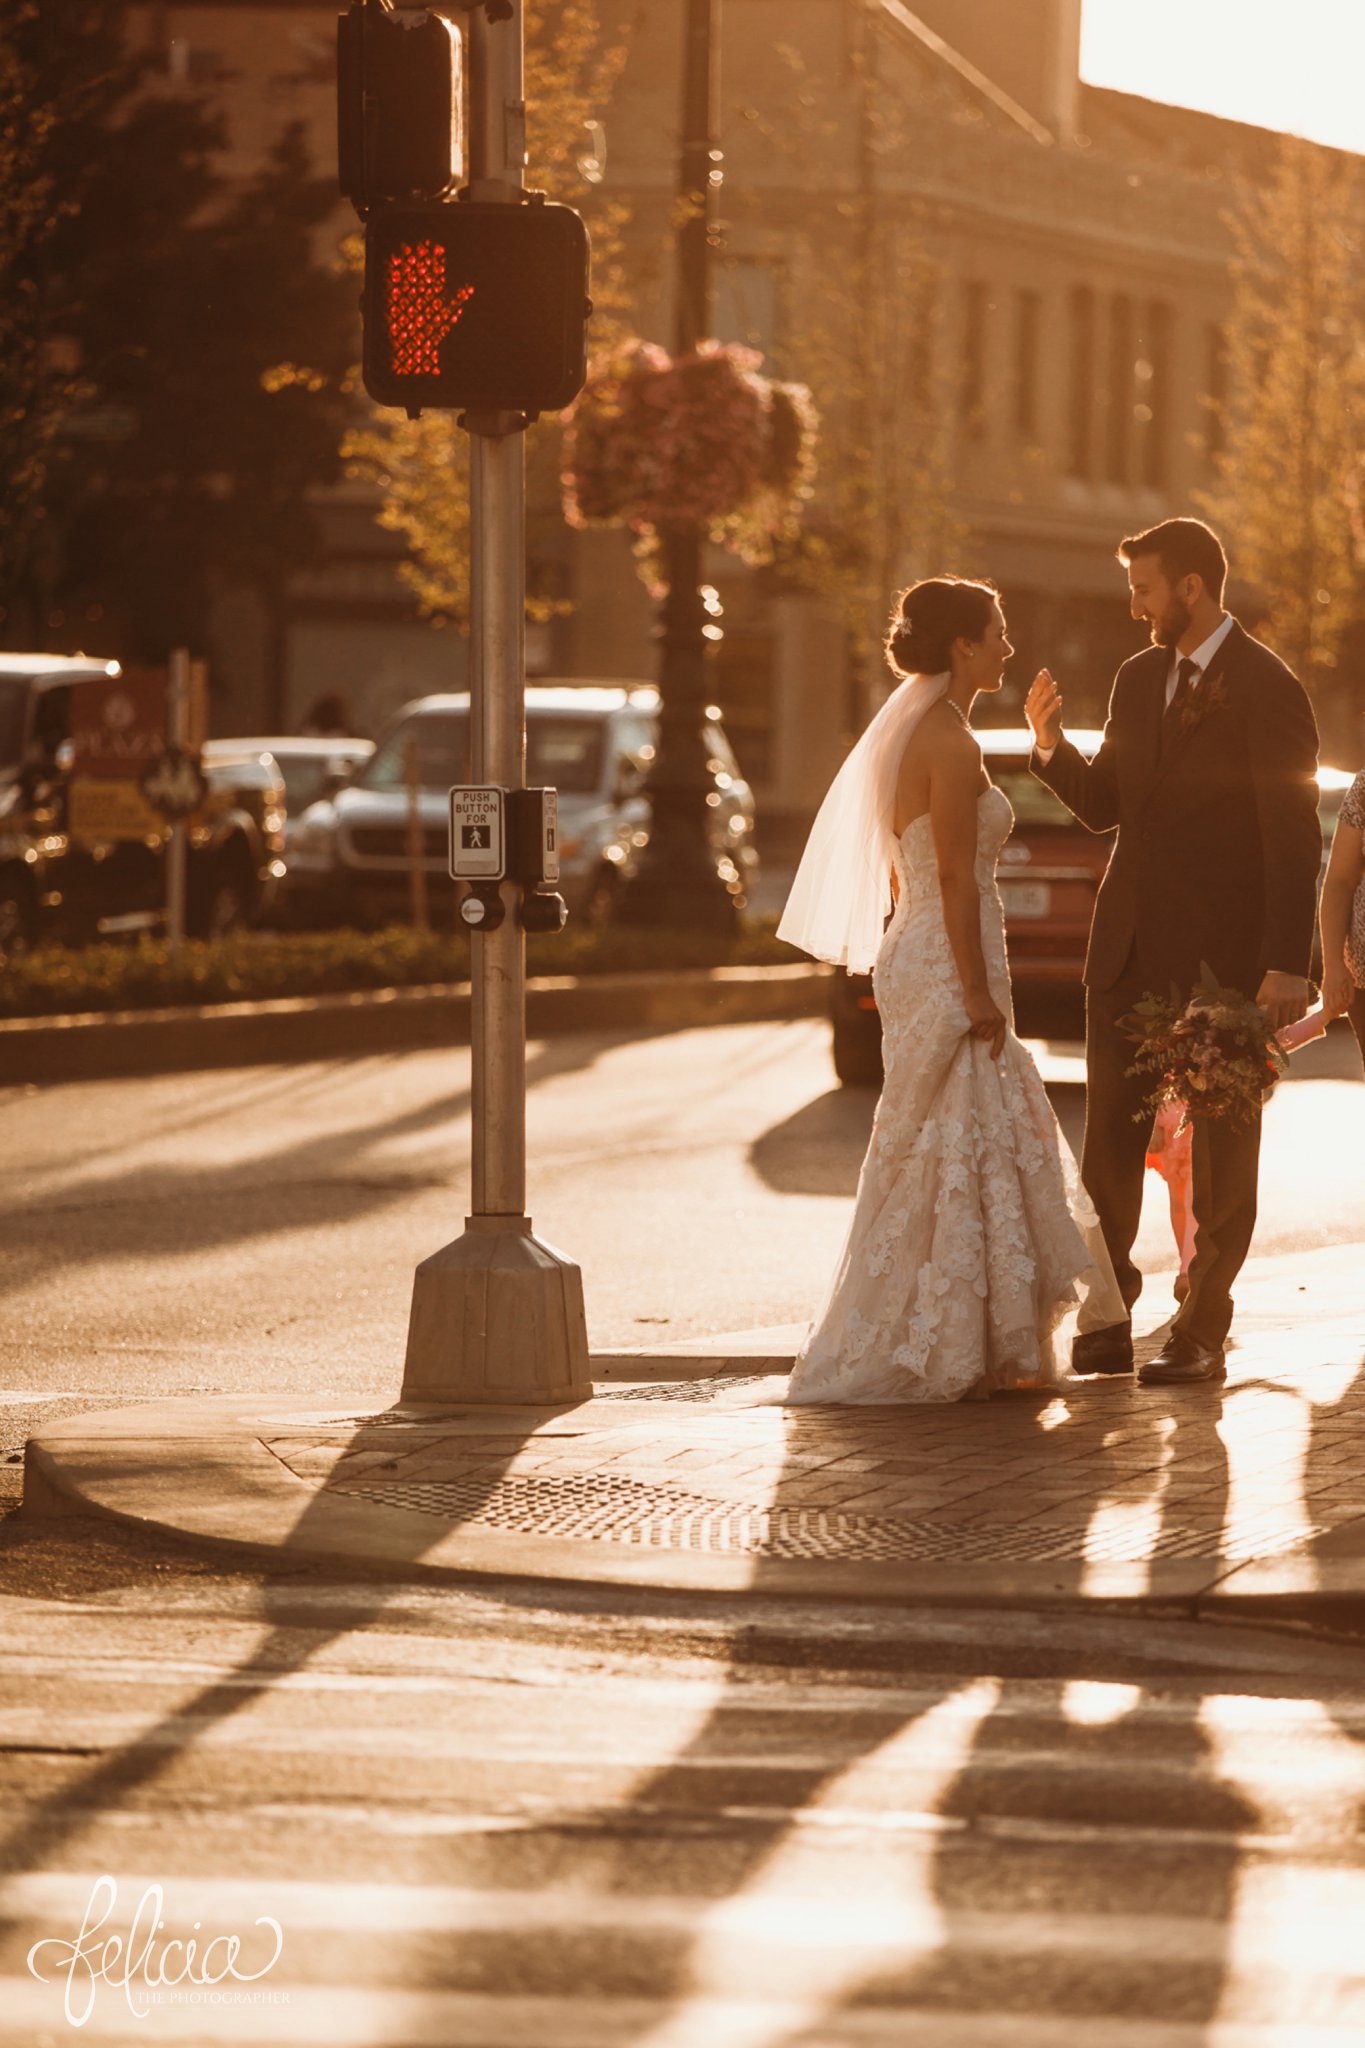 images by feliciathephotographer.com | wedding photographer | kansas city | golden hour | sunset | plaza | romantic | rustic florals | lace dress | 